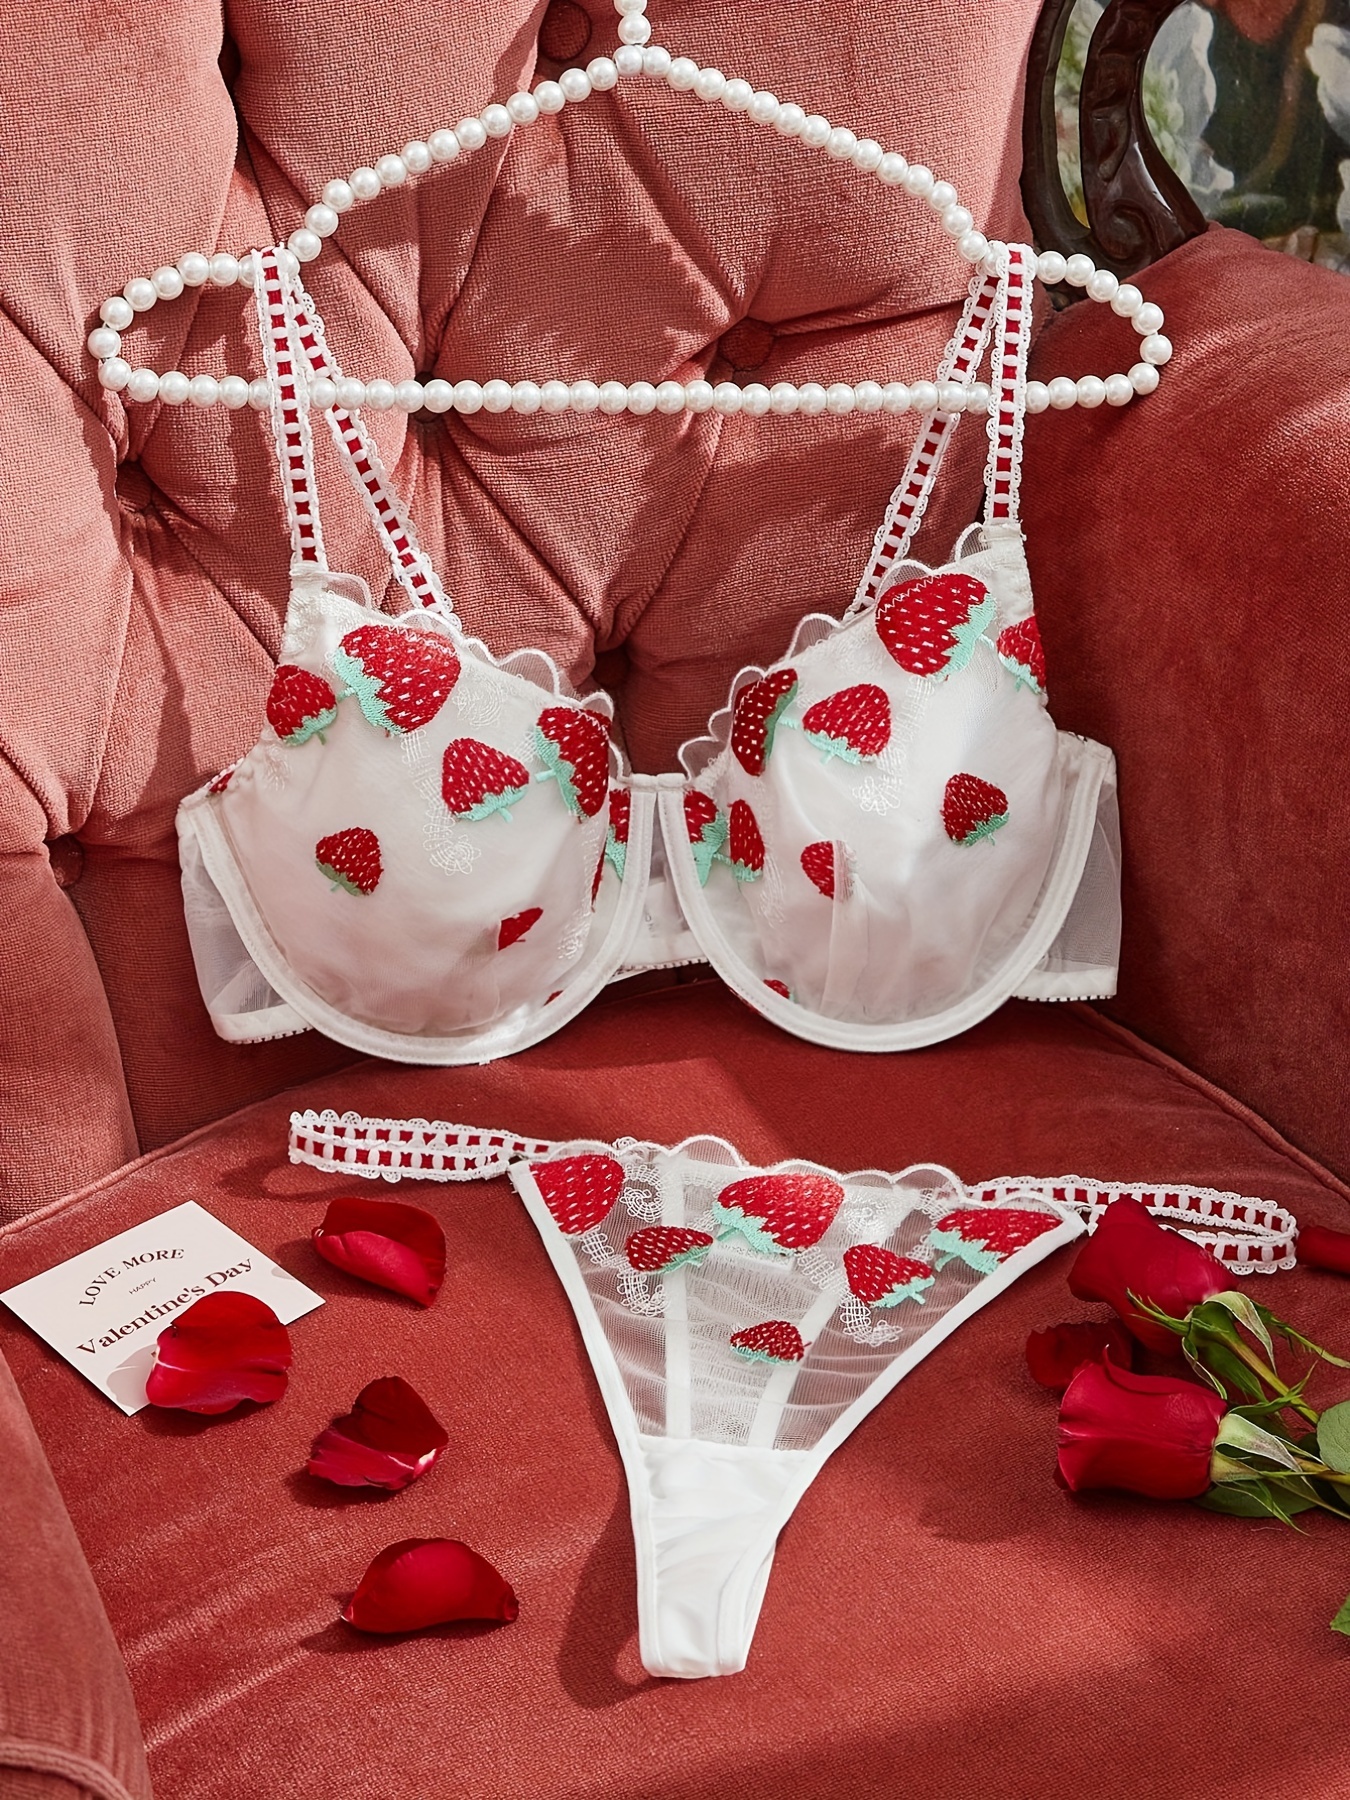 Strawberry lingerie set